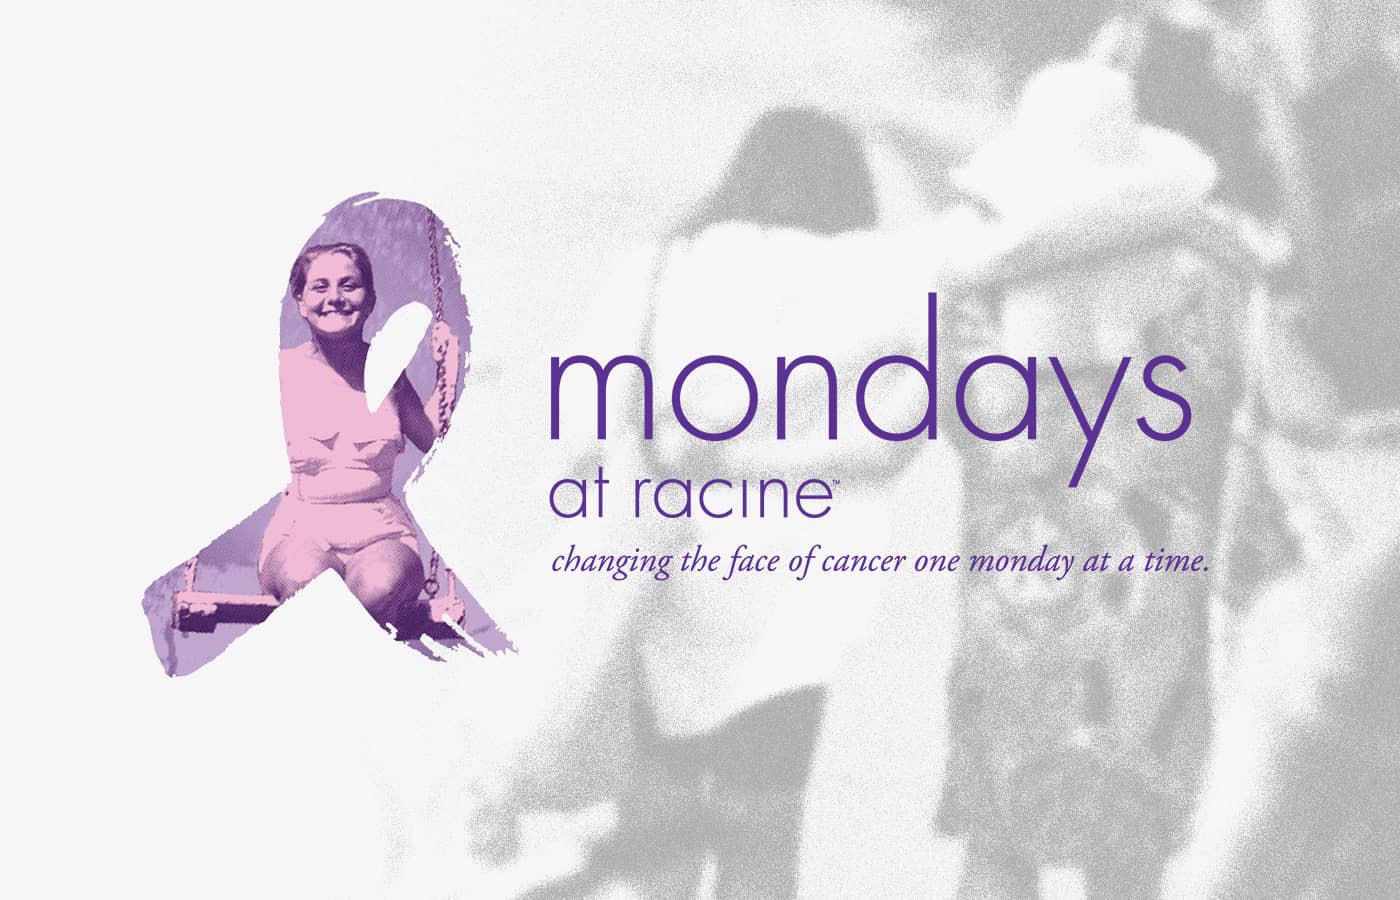 Mondays at Racine logo on grainy background